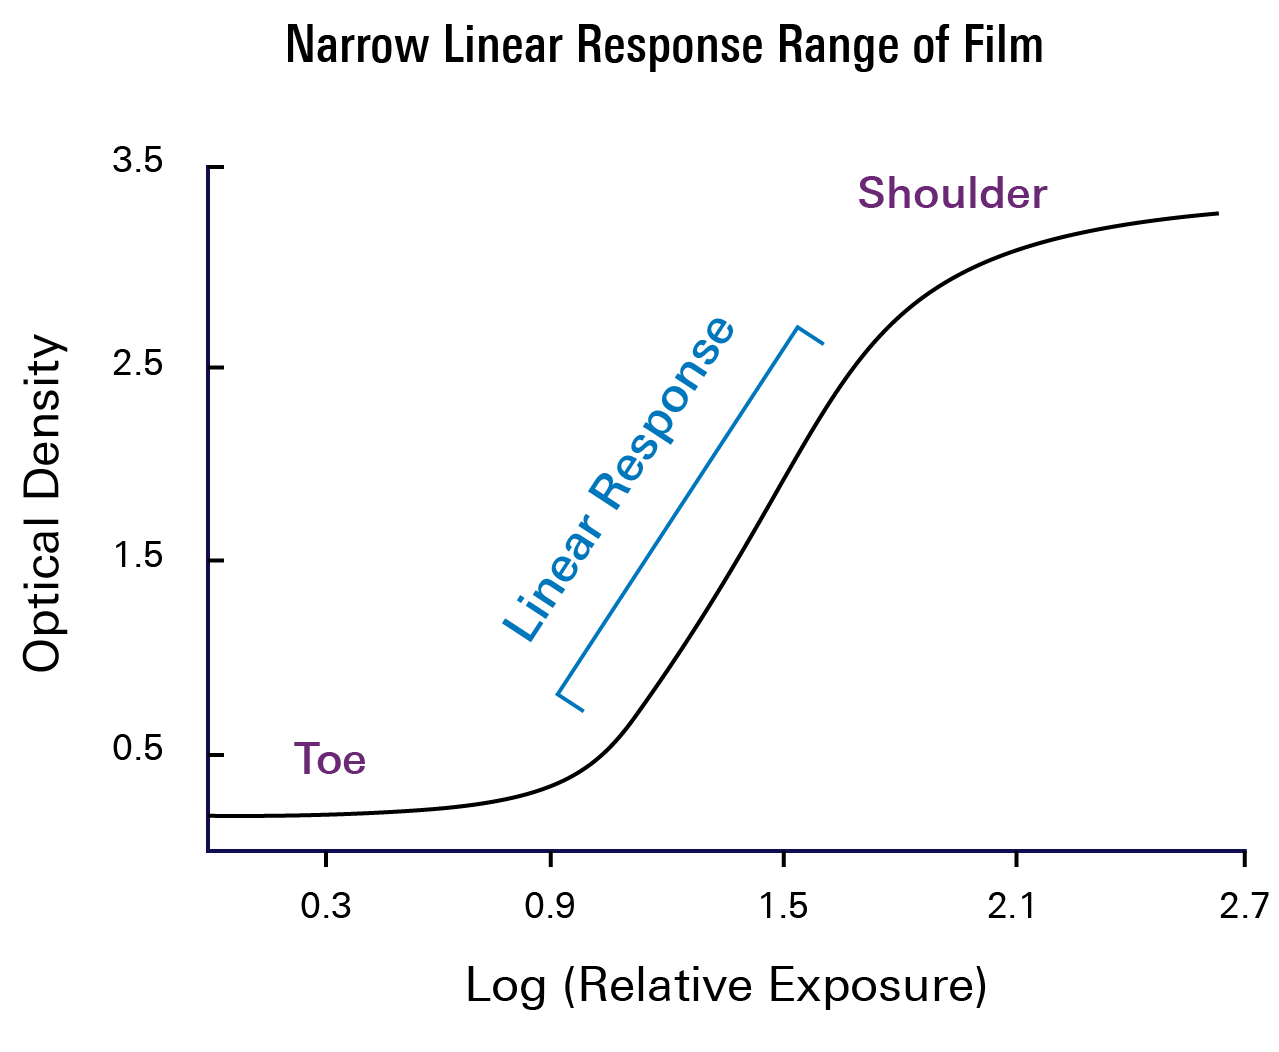 Figure 1: Linear Response Range of Film Graph